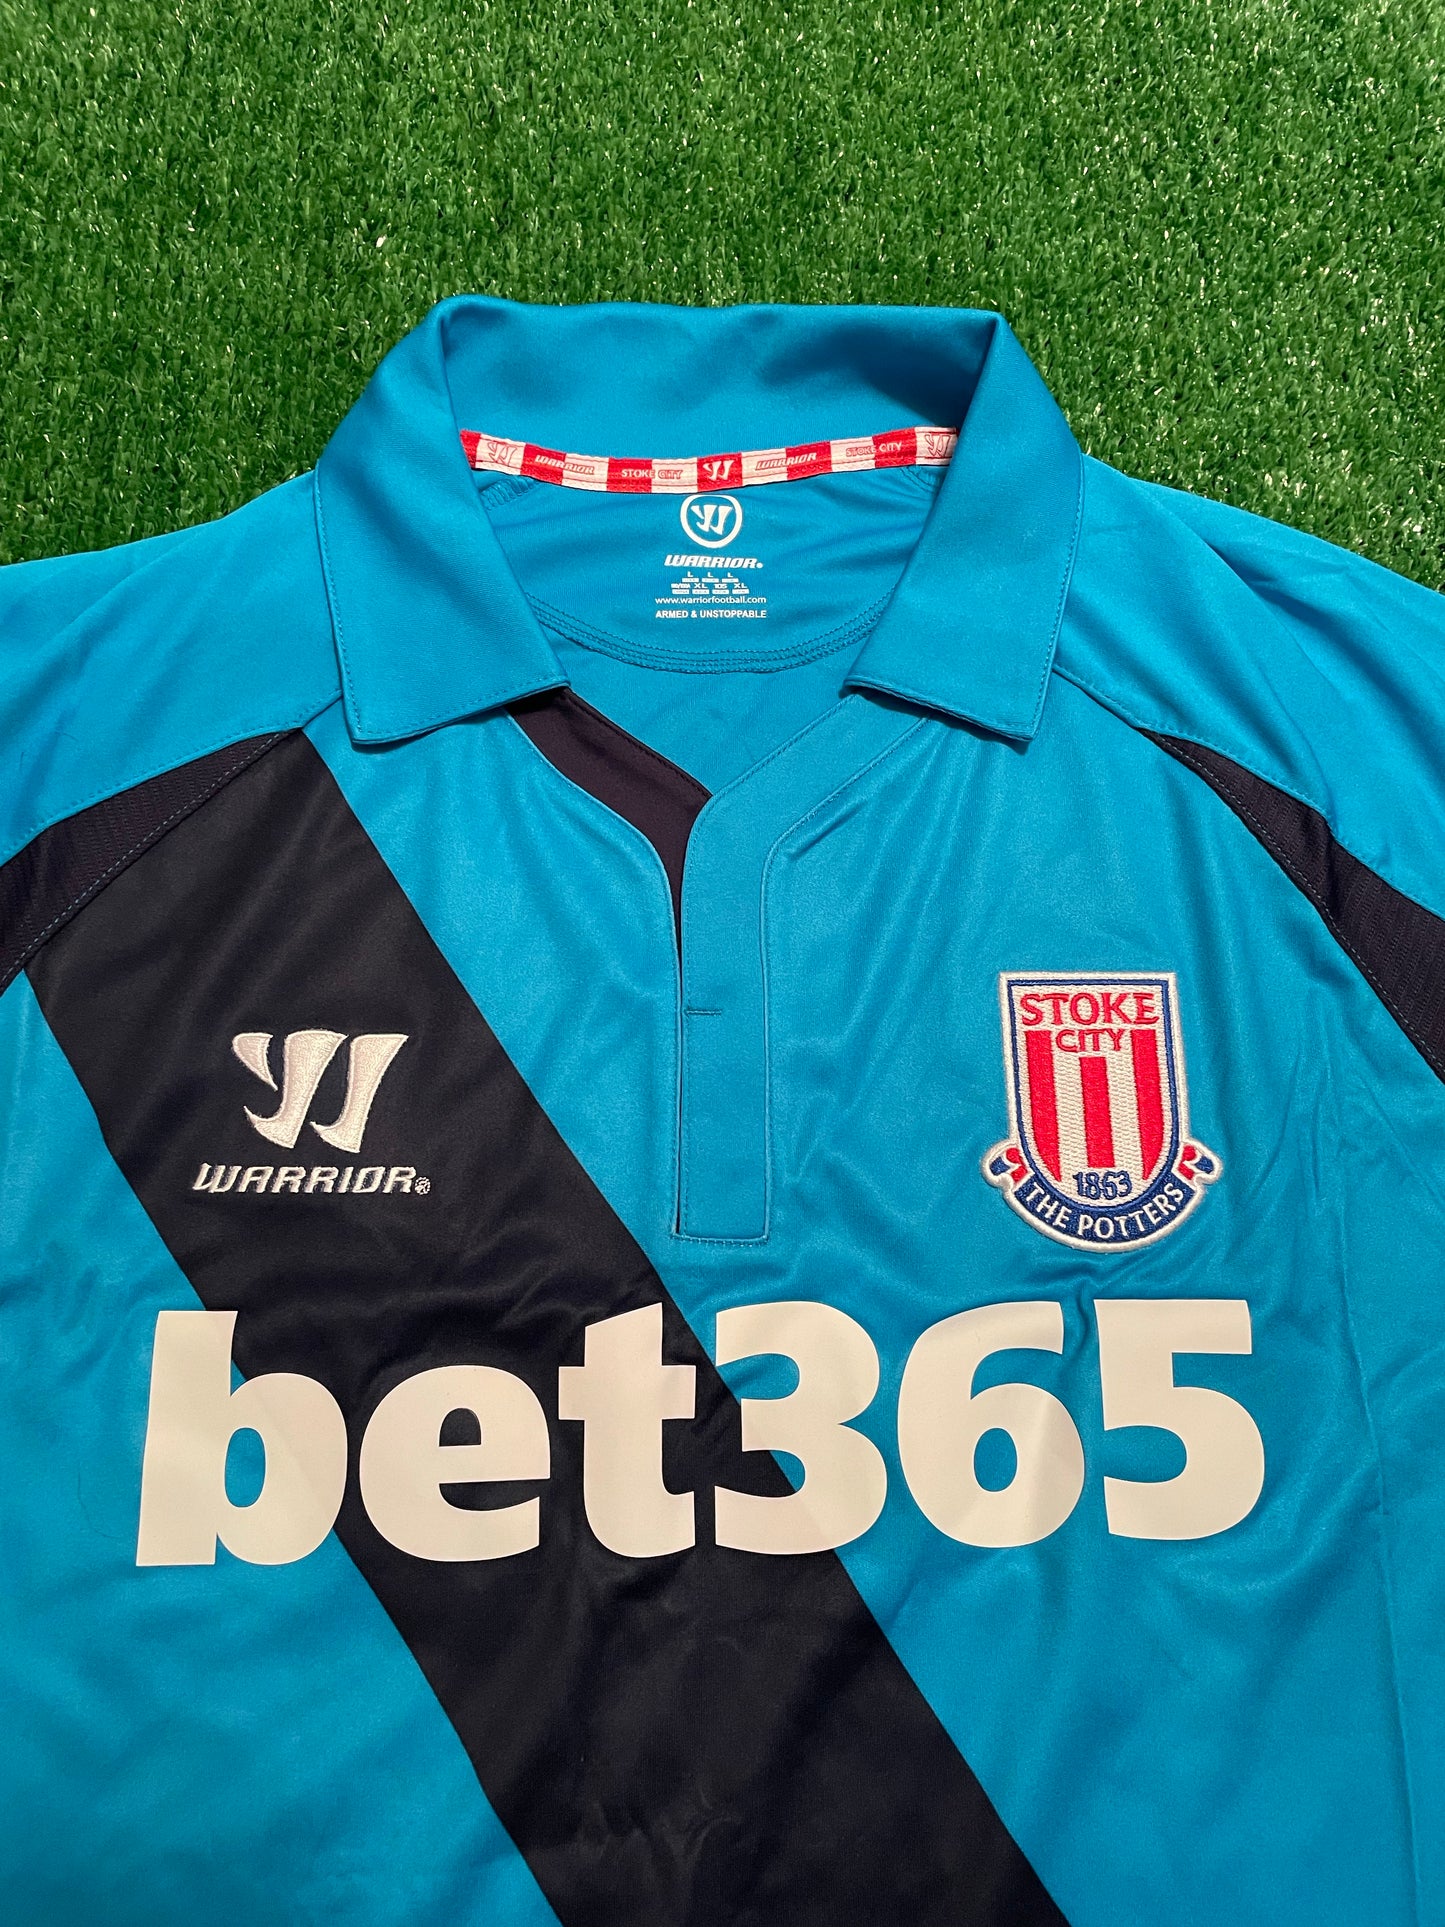 Stoke City 2014/15 Away Shirt (BNWT) - Size S